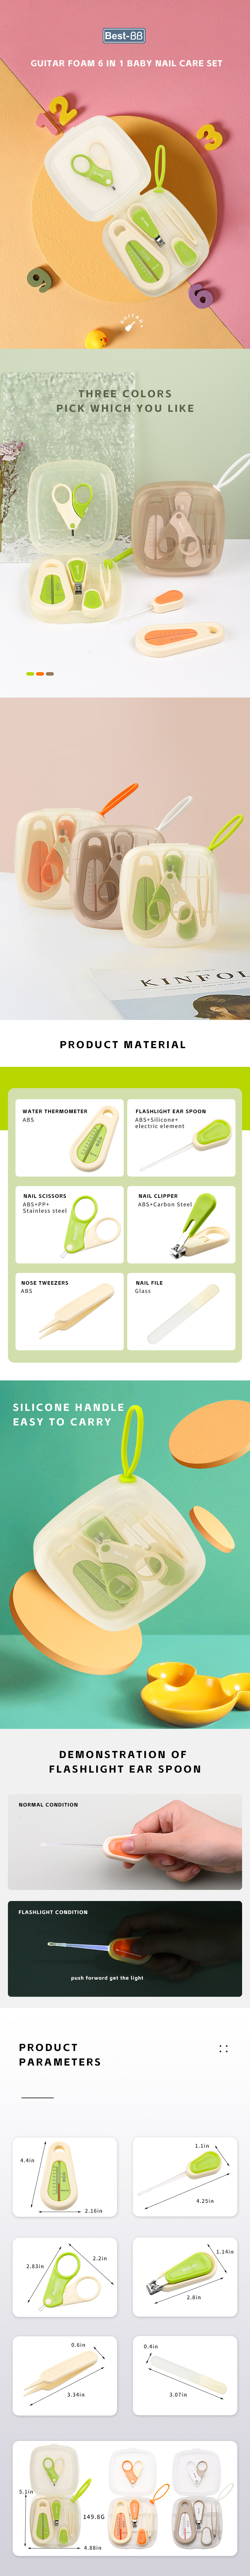 6 in 1 baby nail care kit